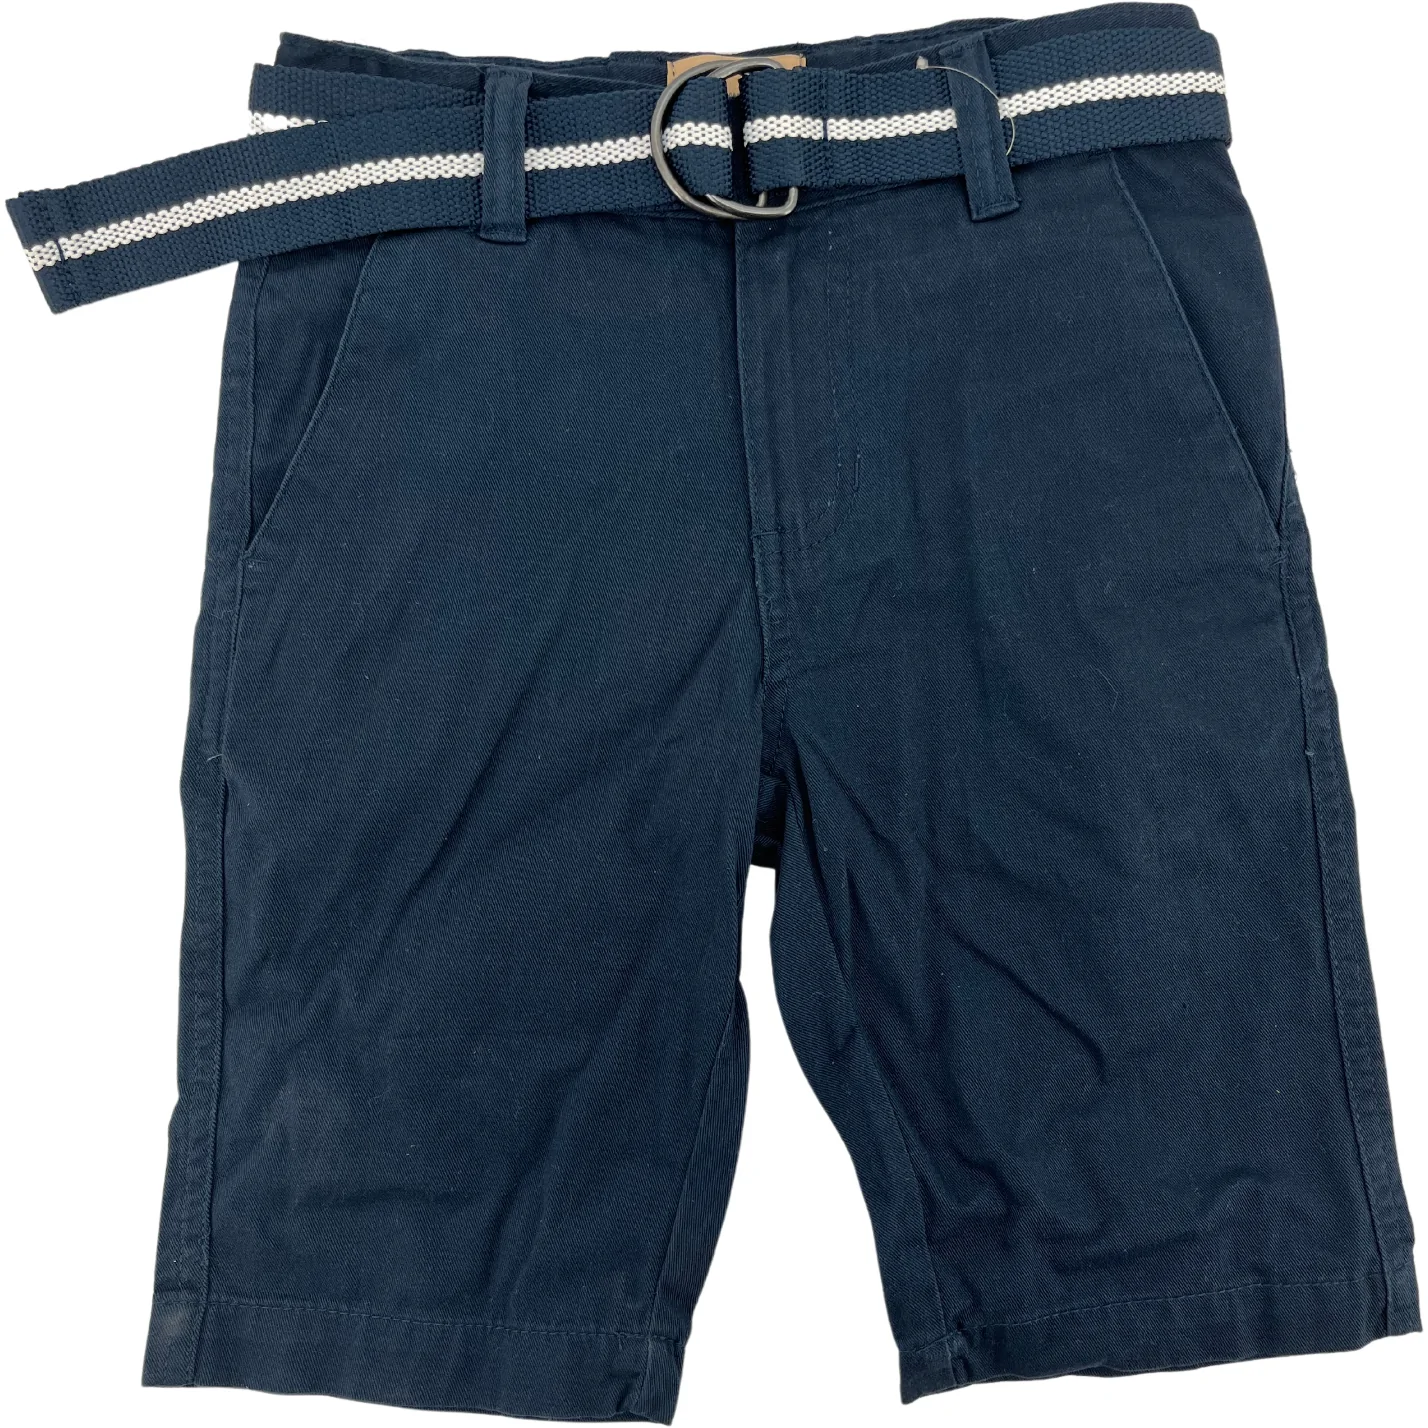 Roebuck Children's Shorts / Boy's Summer Shorts / Navy / Size 8